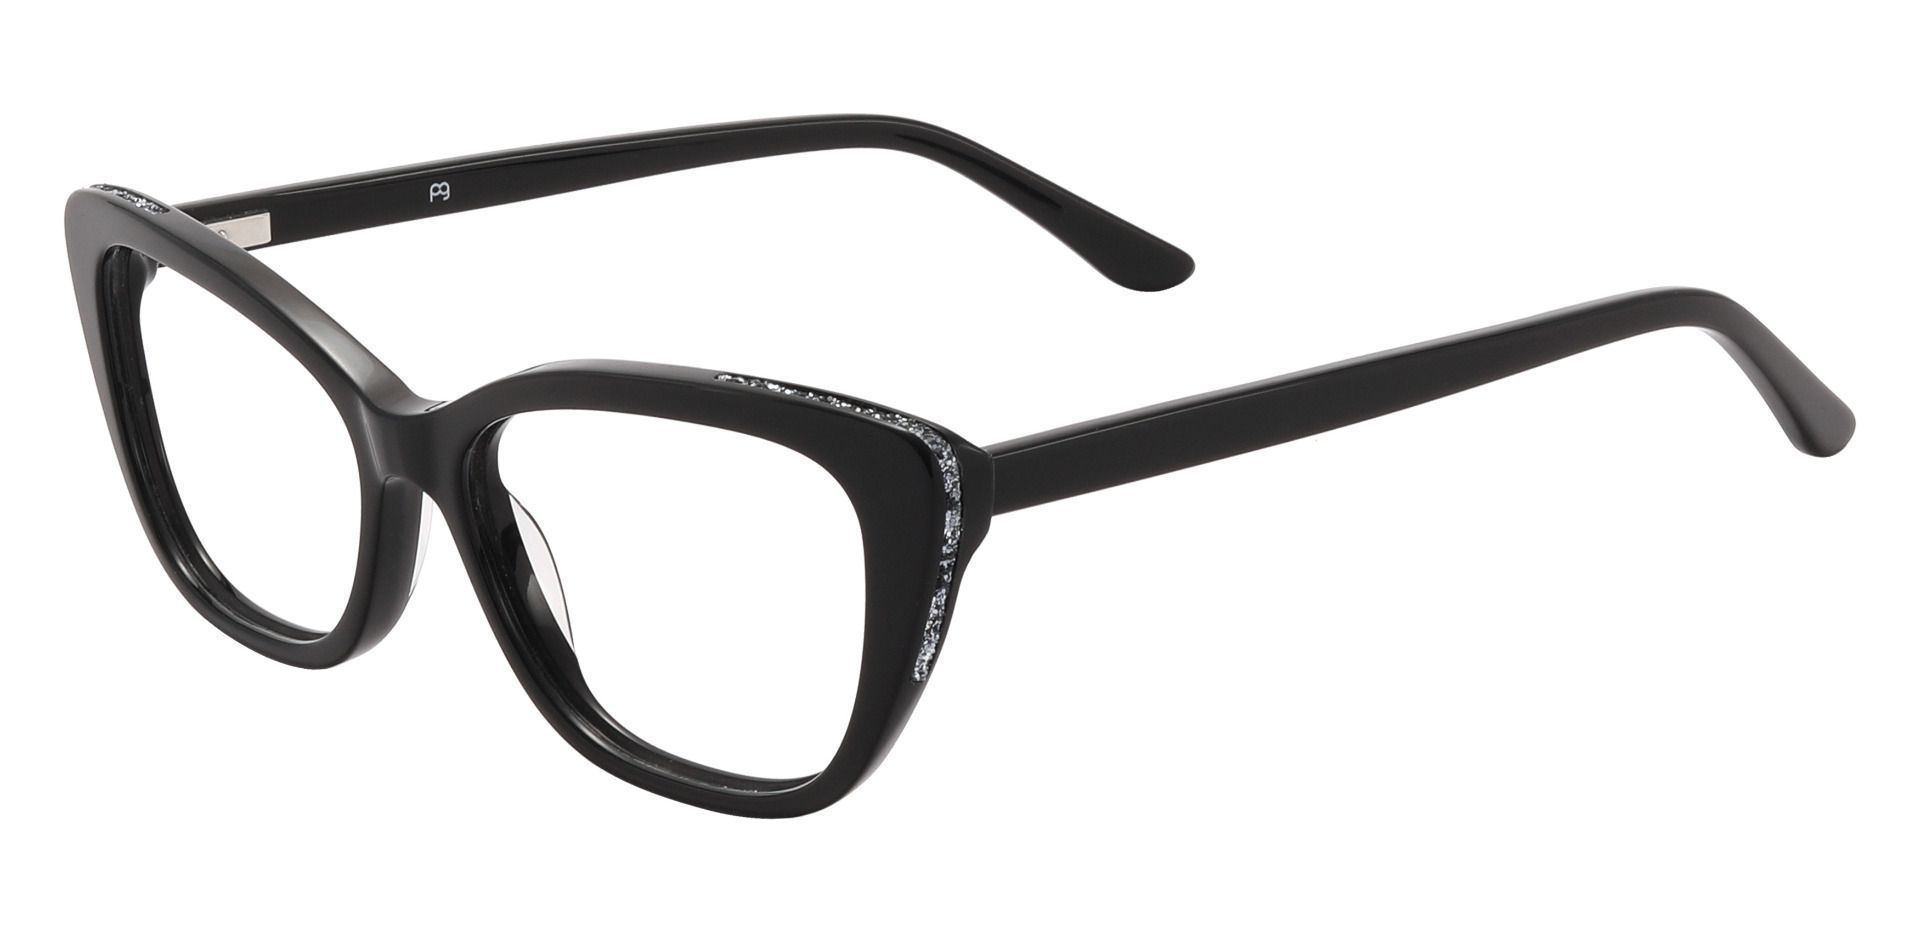 Fairburn Cat Eye Prescription Glasses - Black